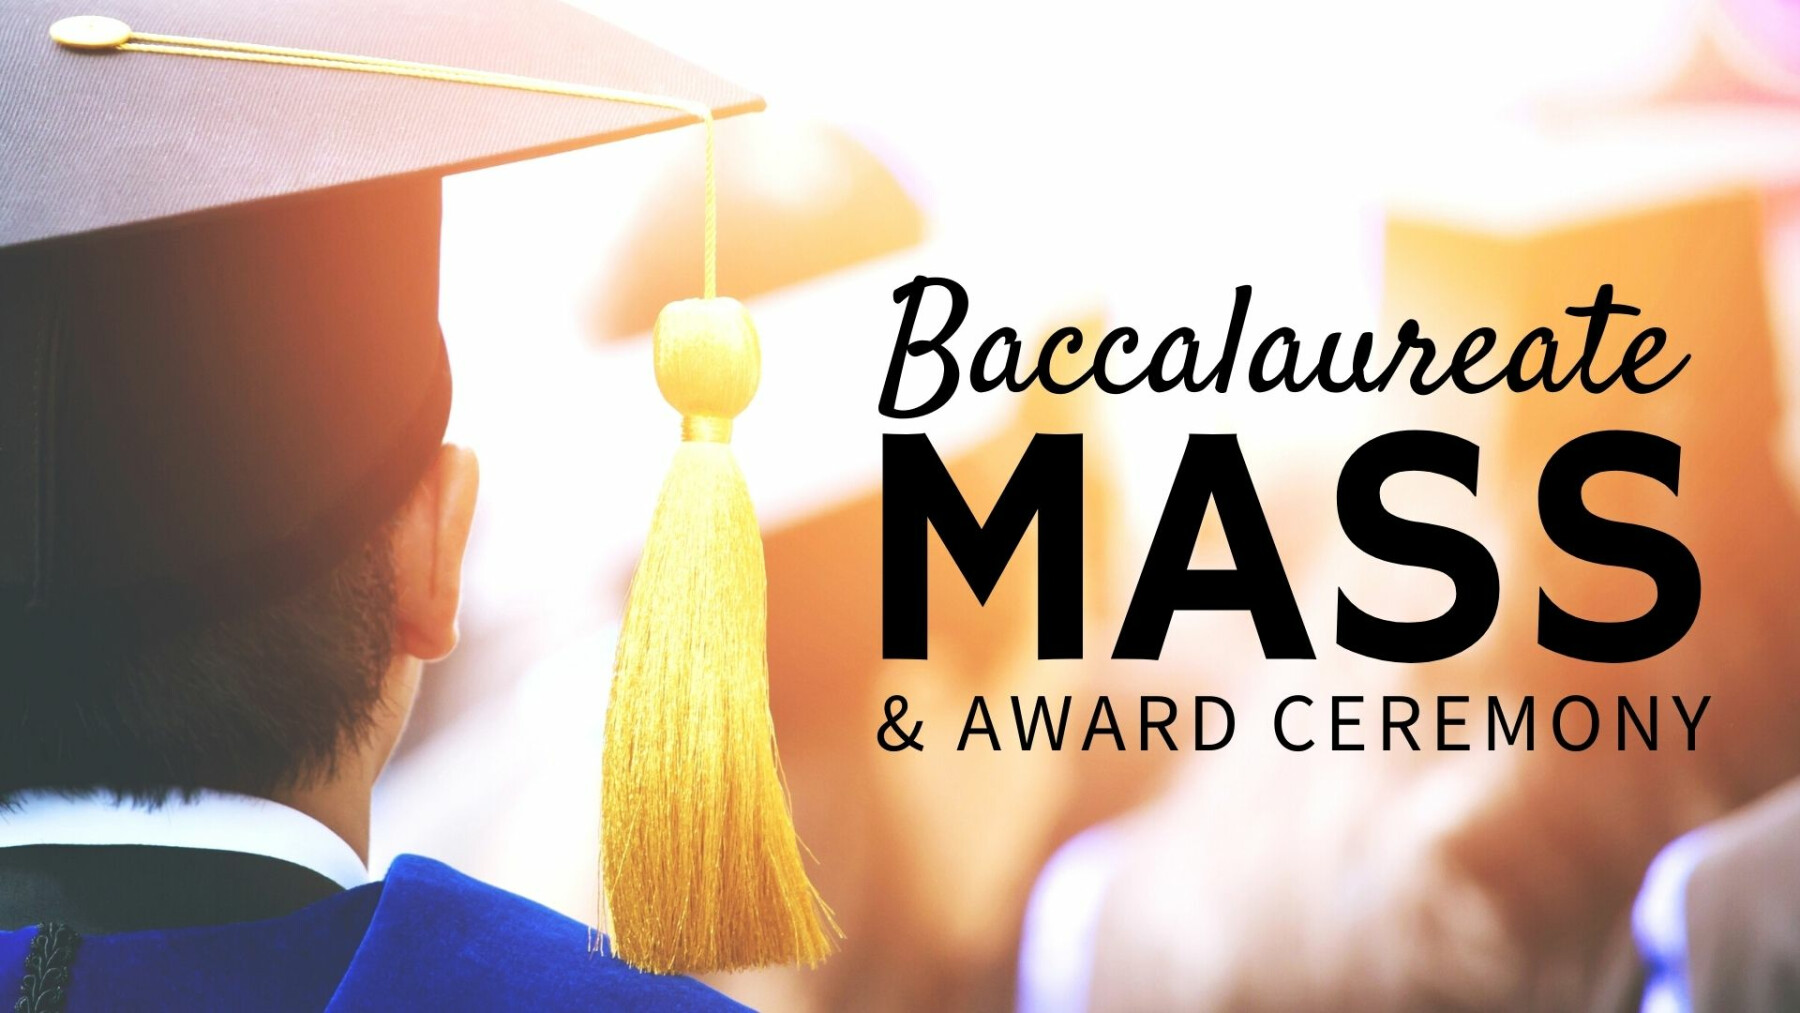 Baccalaureate Mass & Award Ceremony